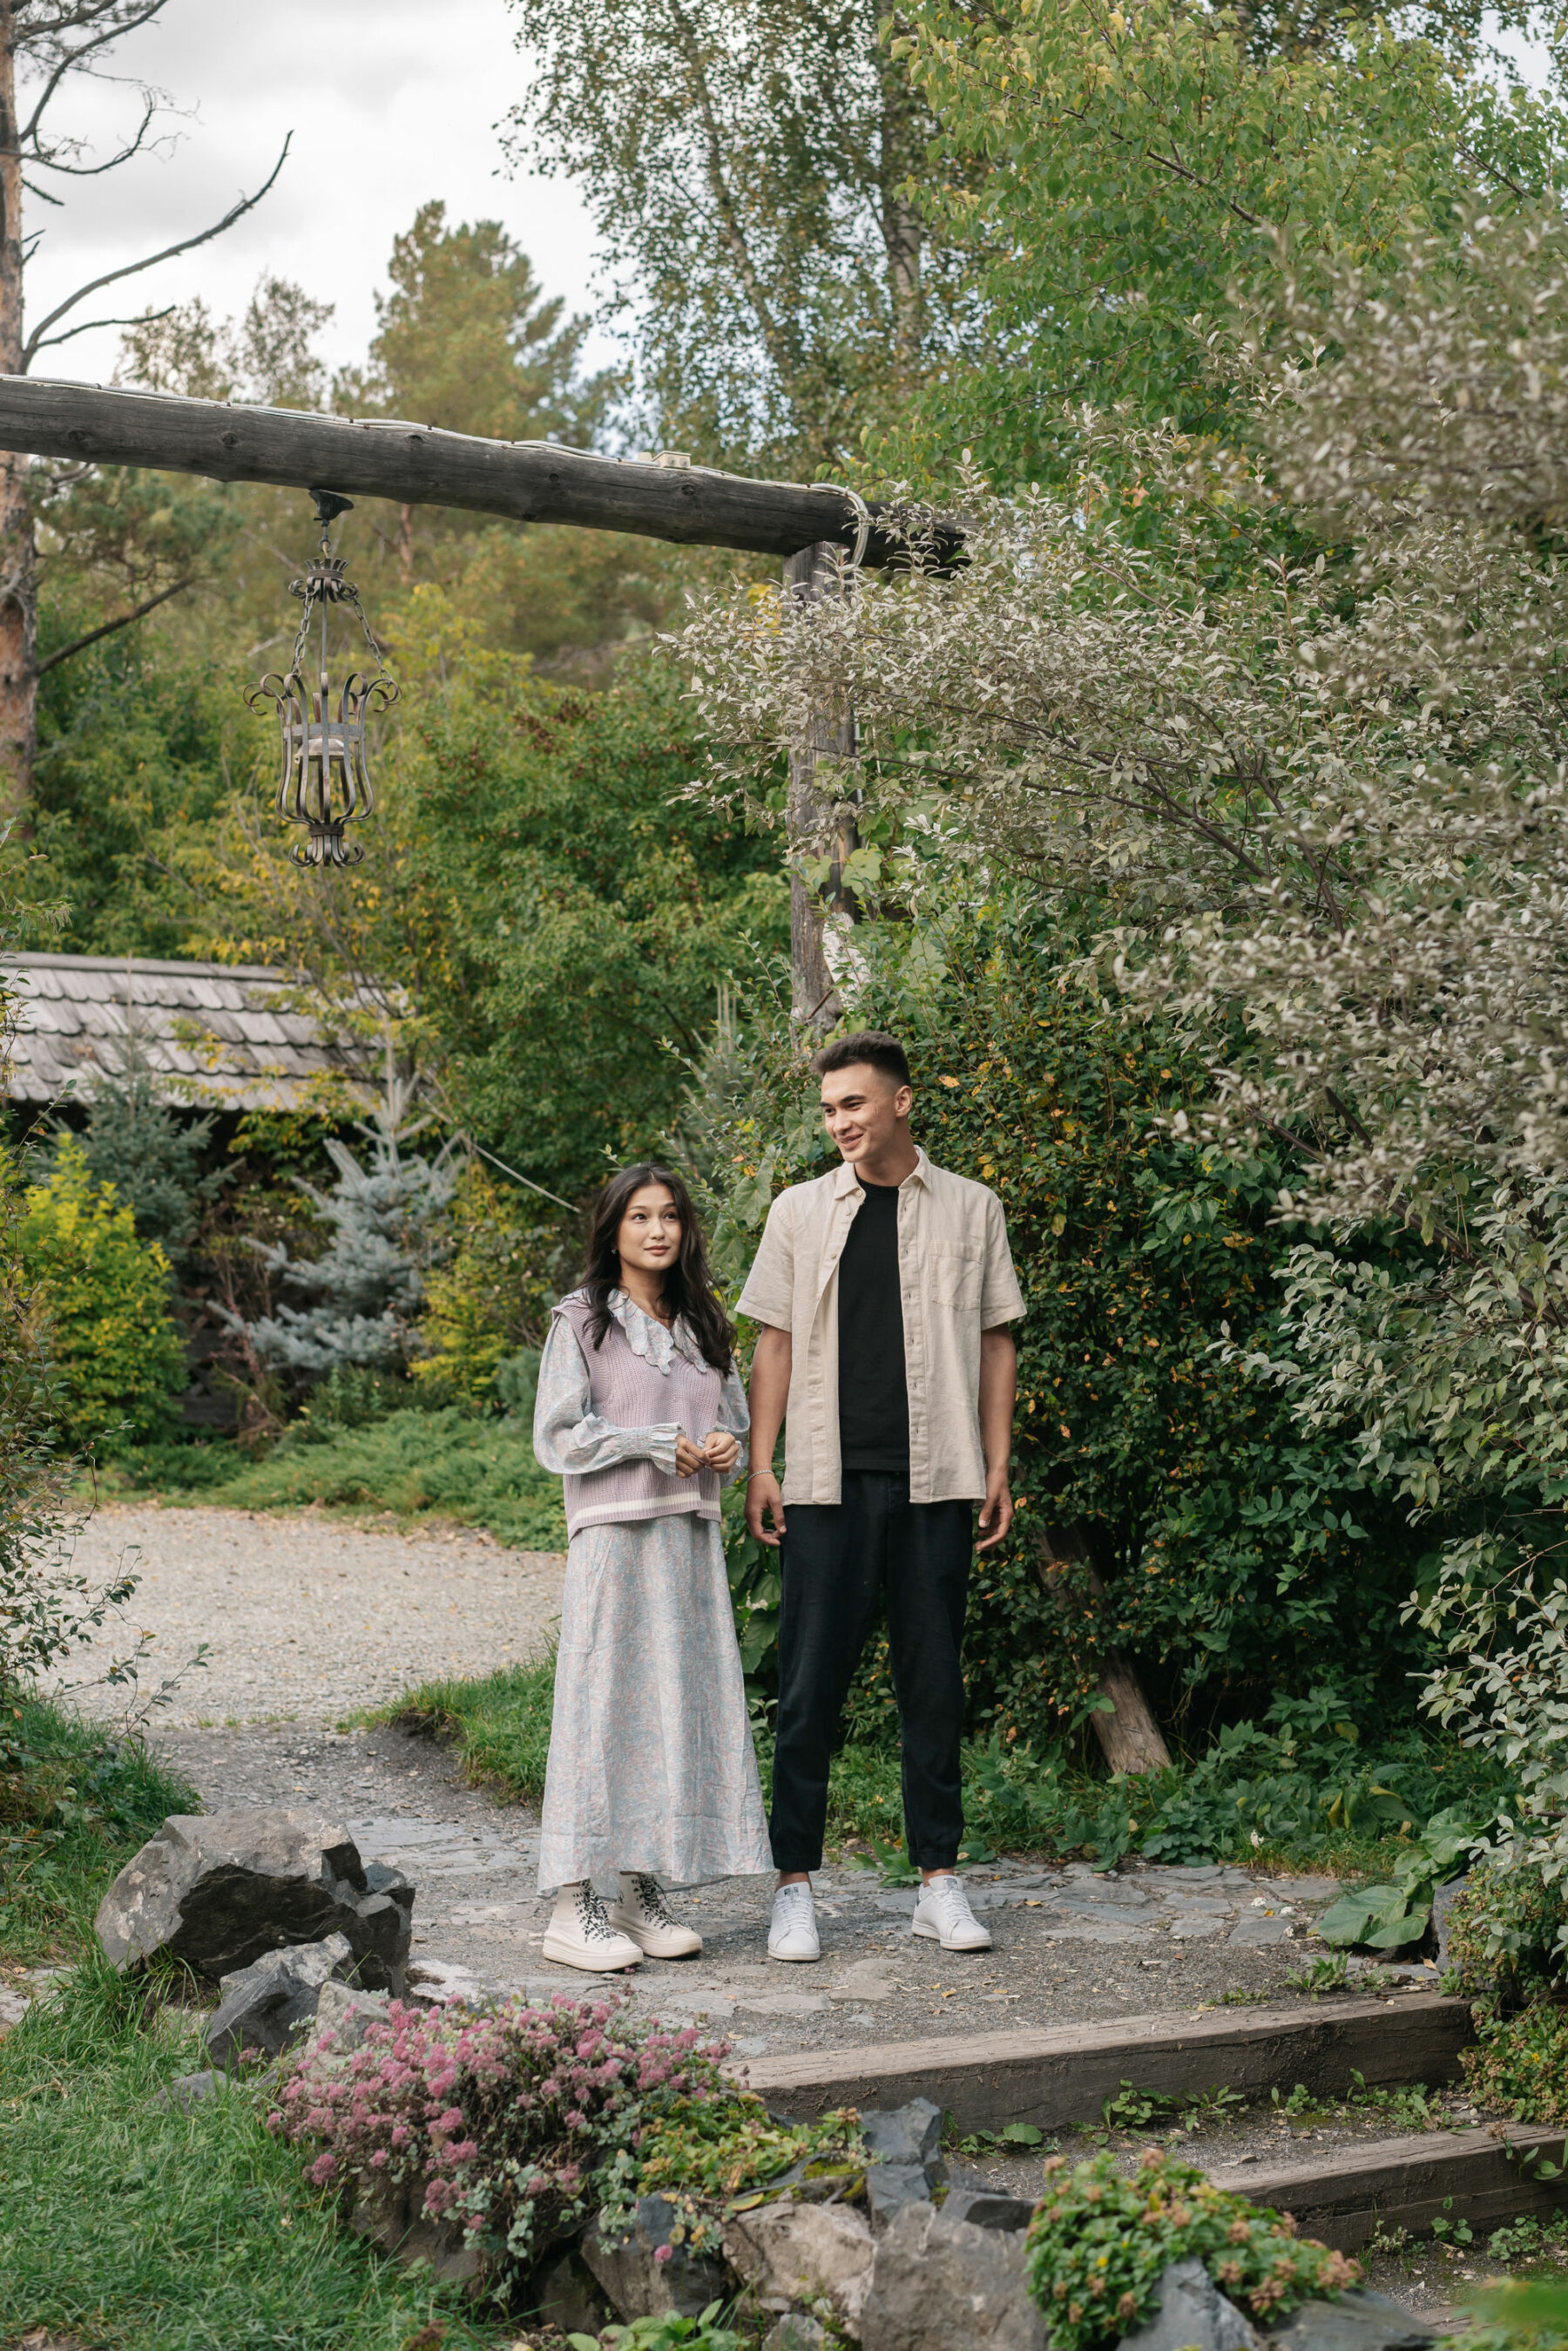 Mixed race couple standing in a garden: Patchwork alternative wedding gift ideas.